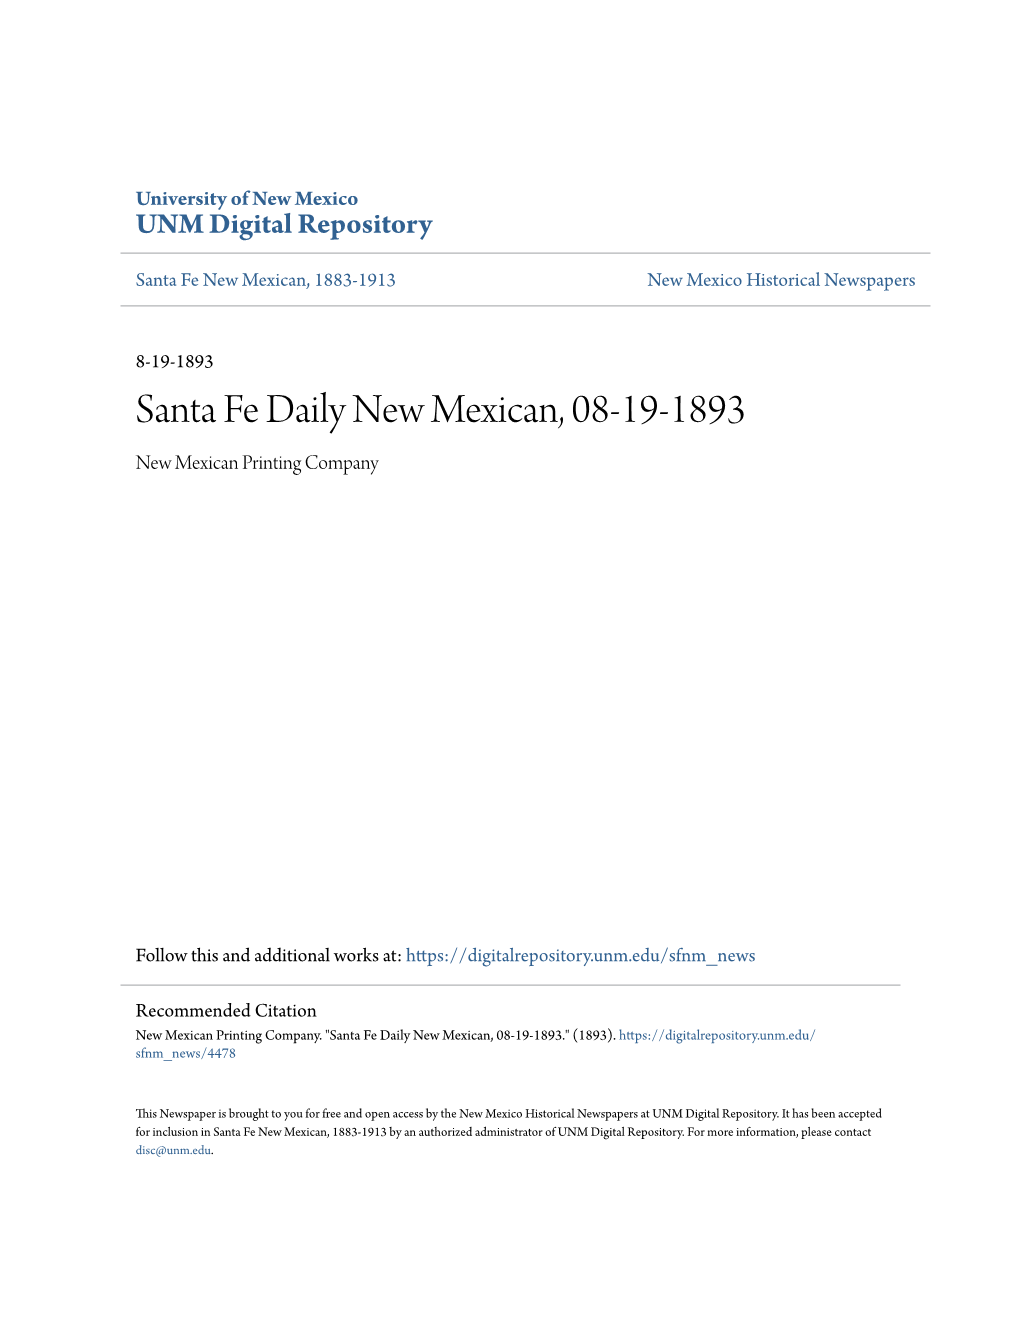 Santa Fe Daily New Mexican, 08-19-1893 New Mexican Printing Company